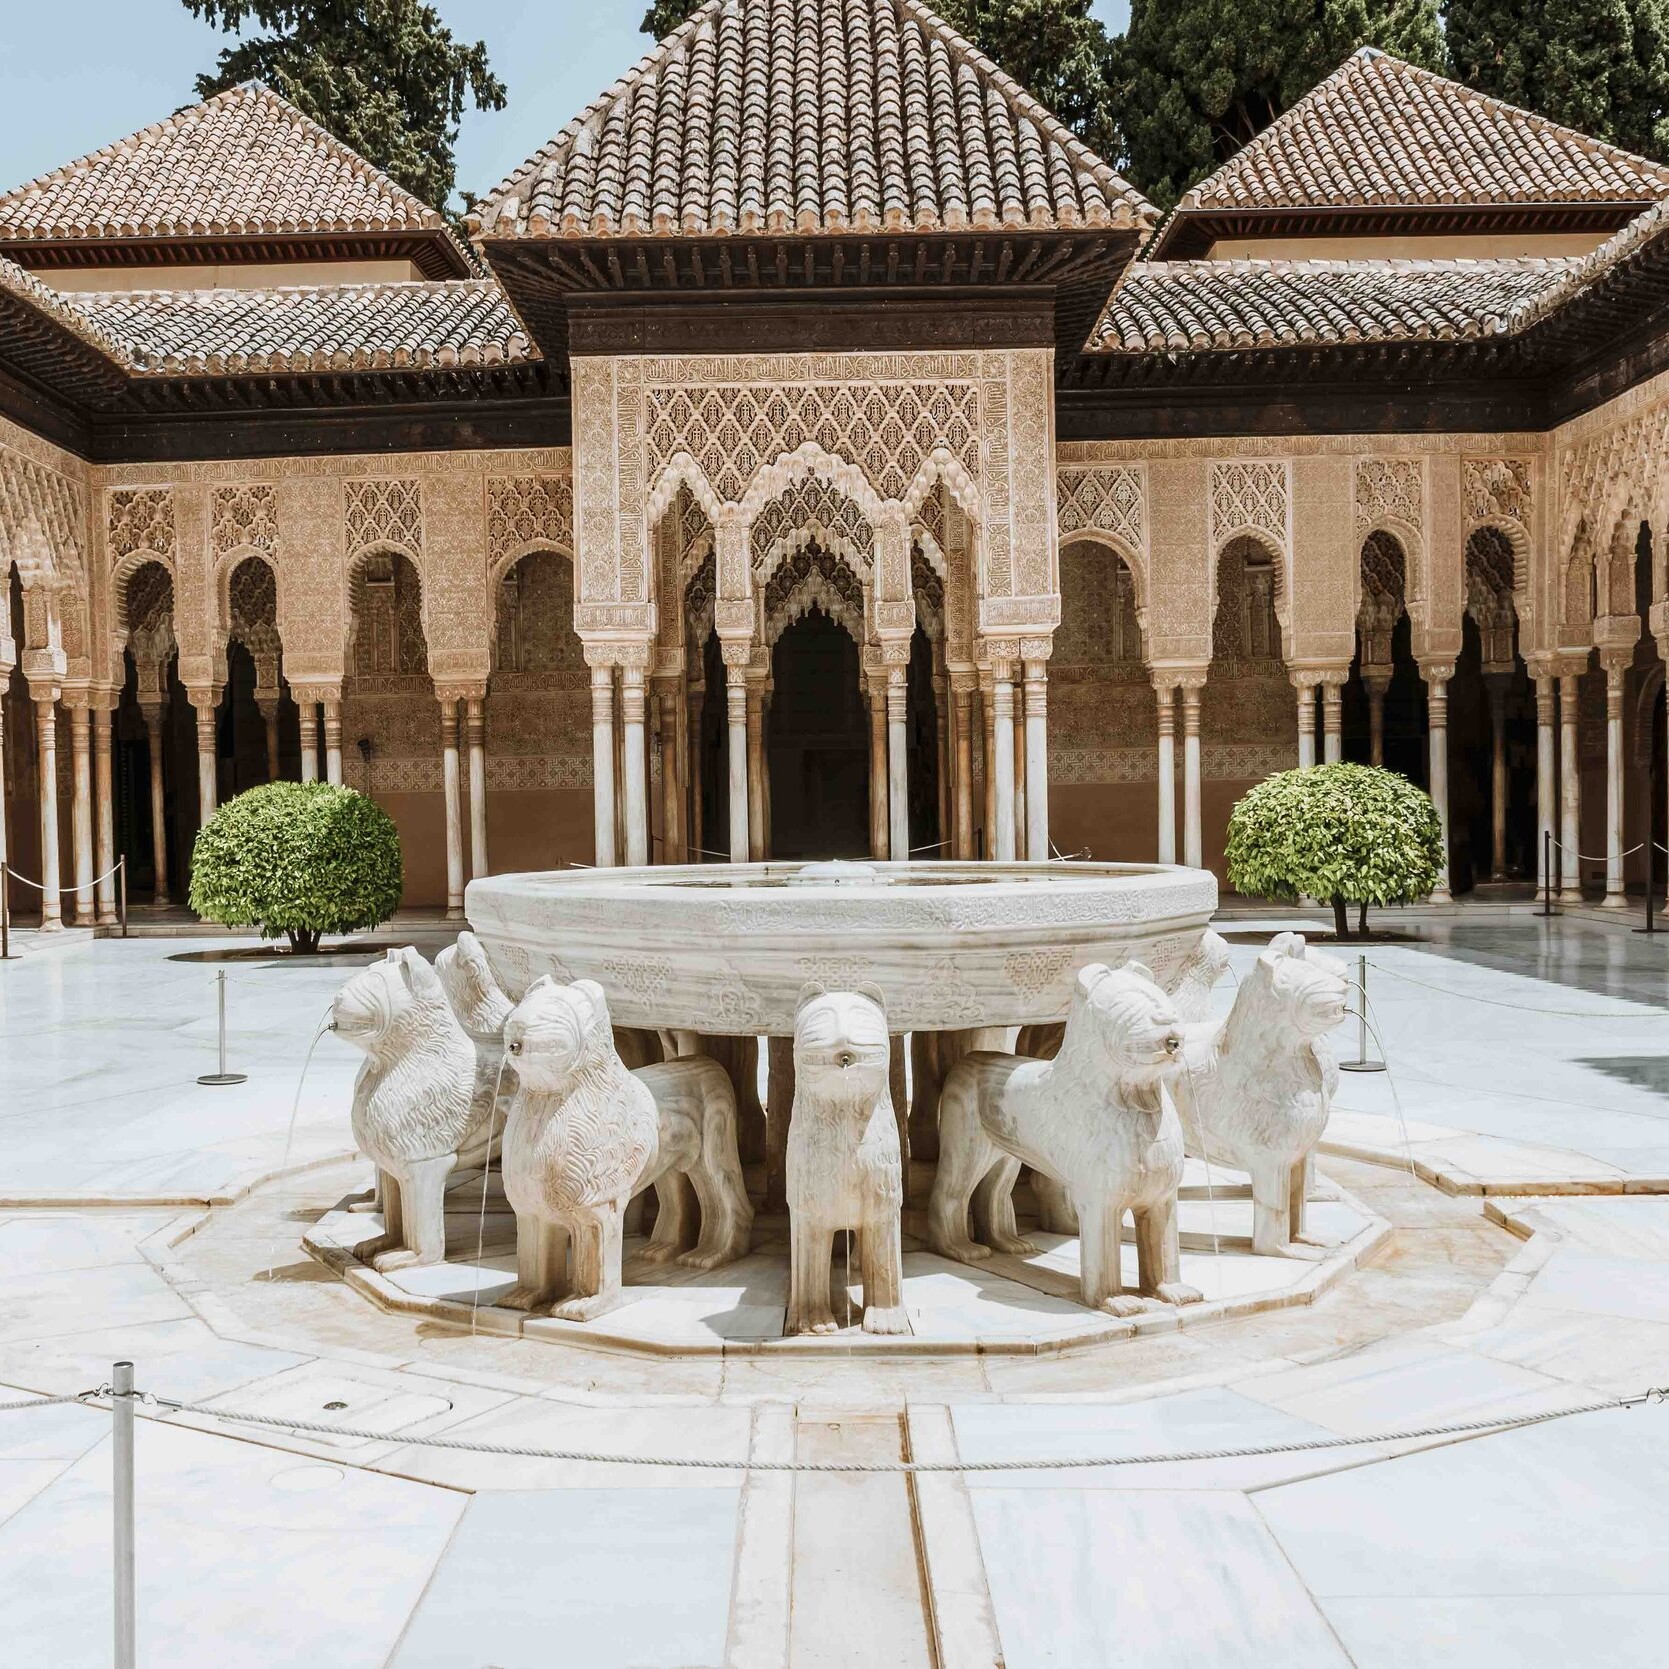 The architecture inside the Alhambra from Malaga to granada